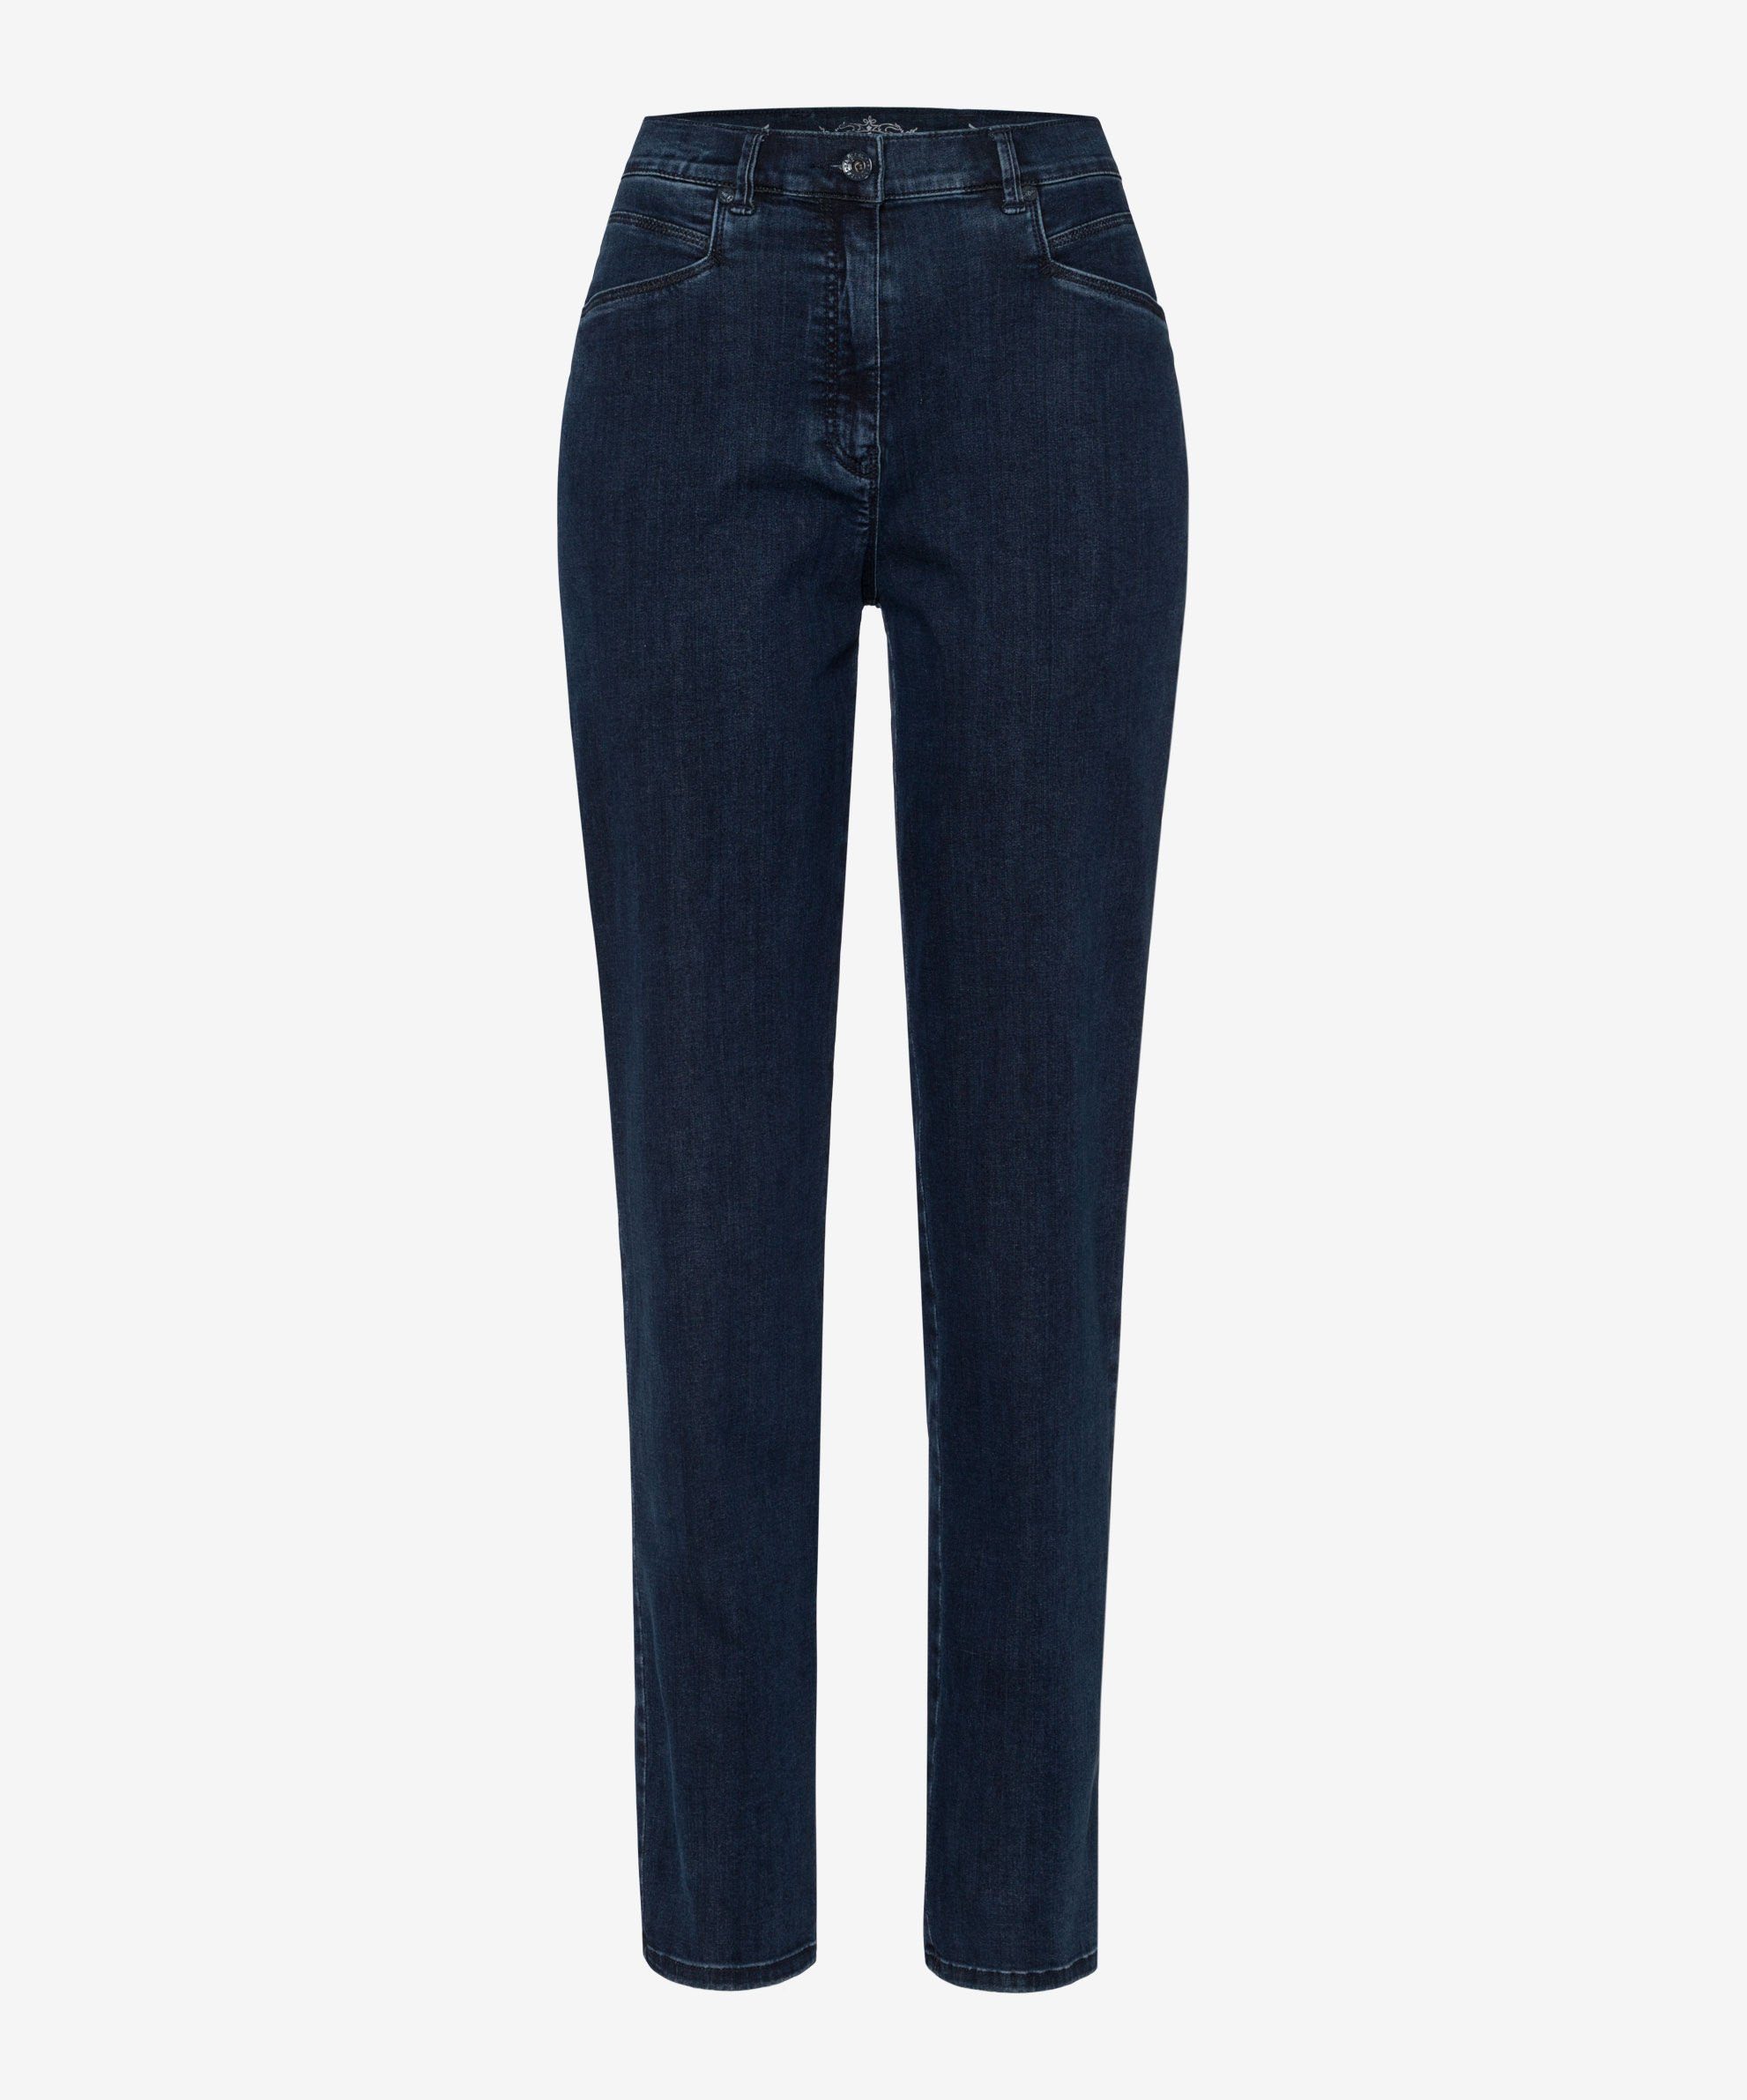 RAPHAELA by BRAX 5-Pocket-Jeans blue Style dark Caren